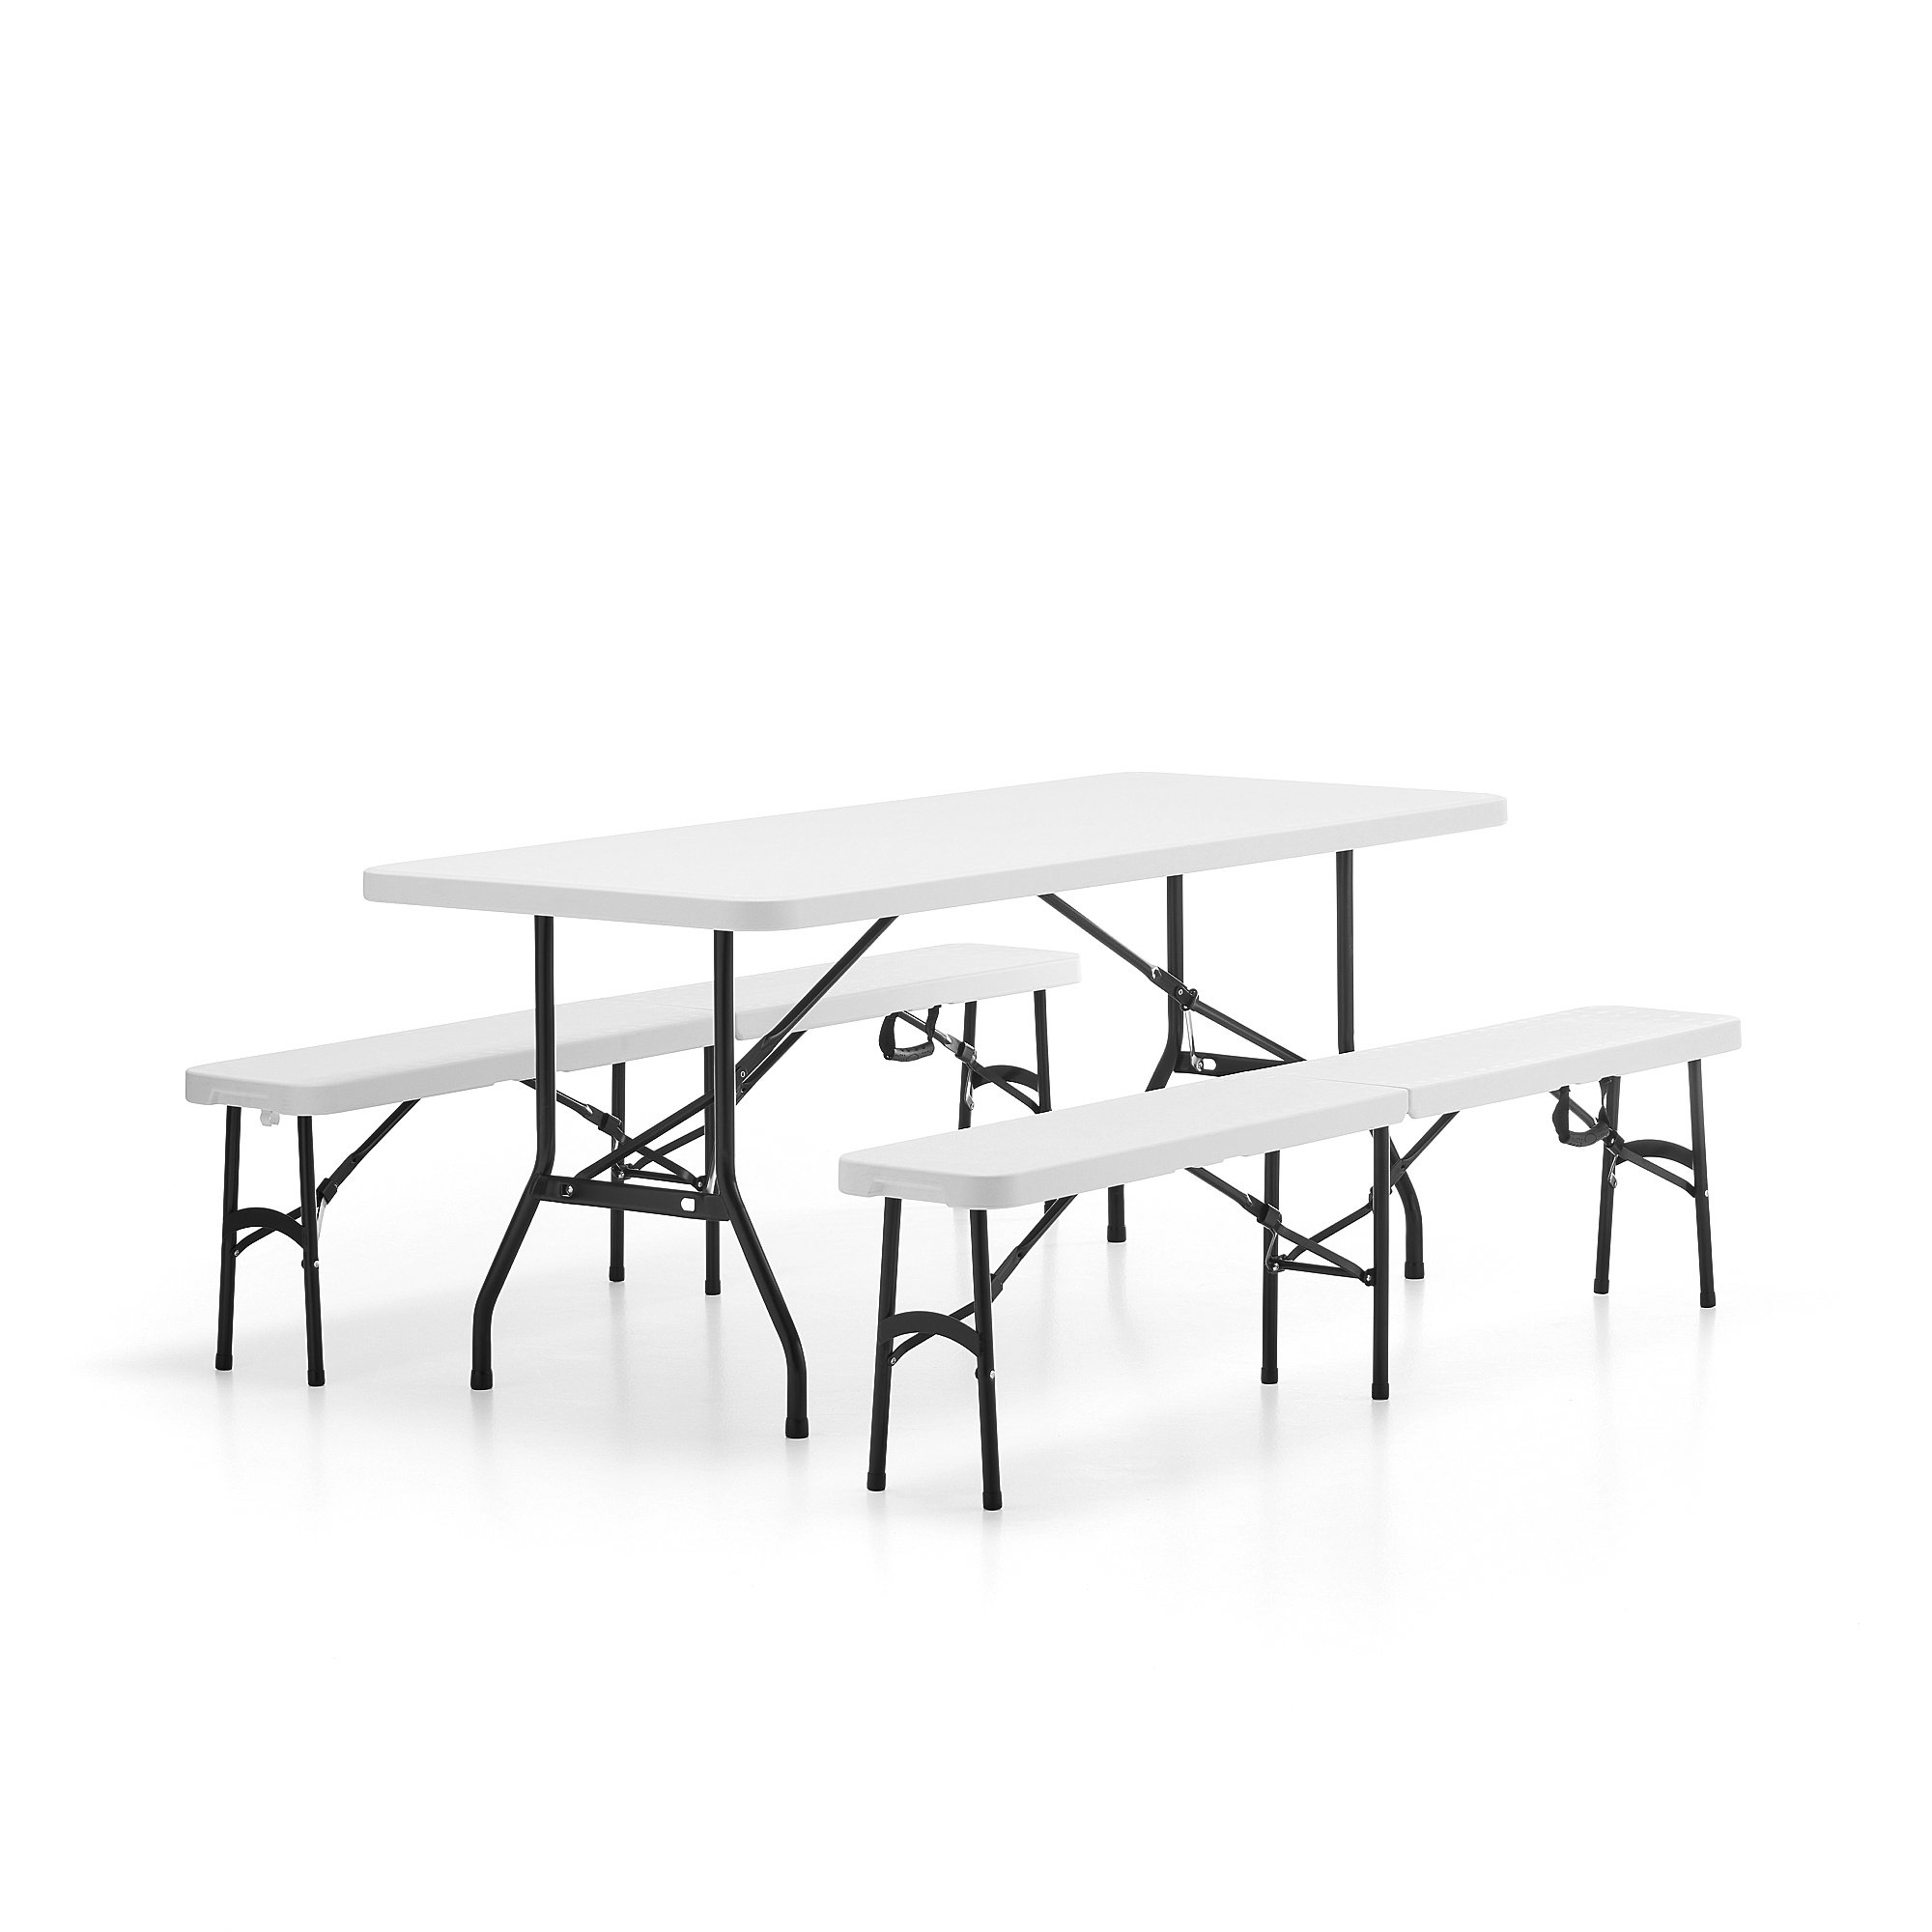 E-shop Zostava: 1 stôl 1830x760 mm + 2 skladacie lavice